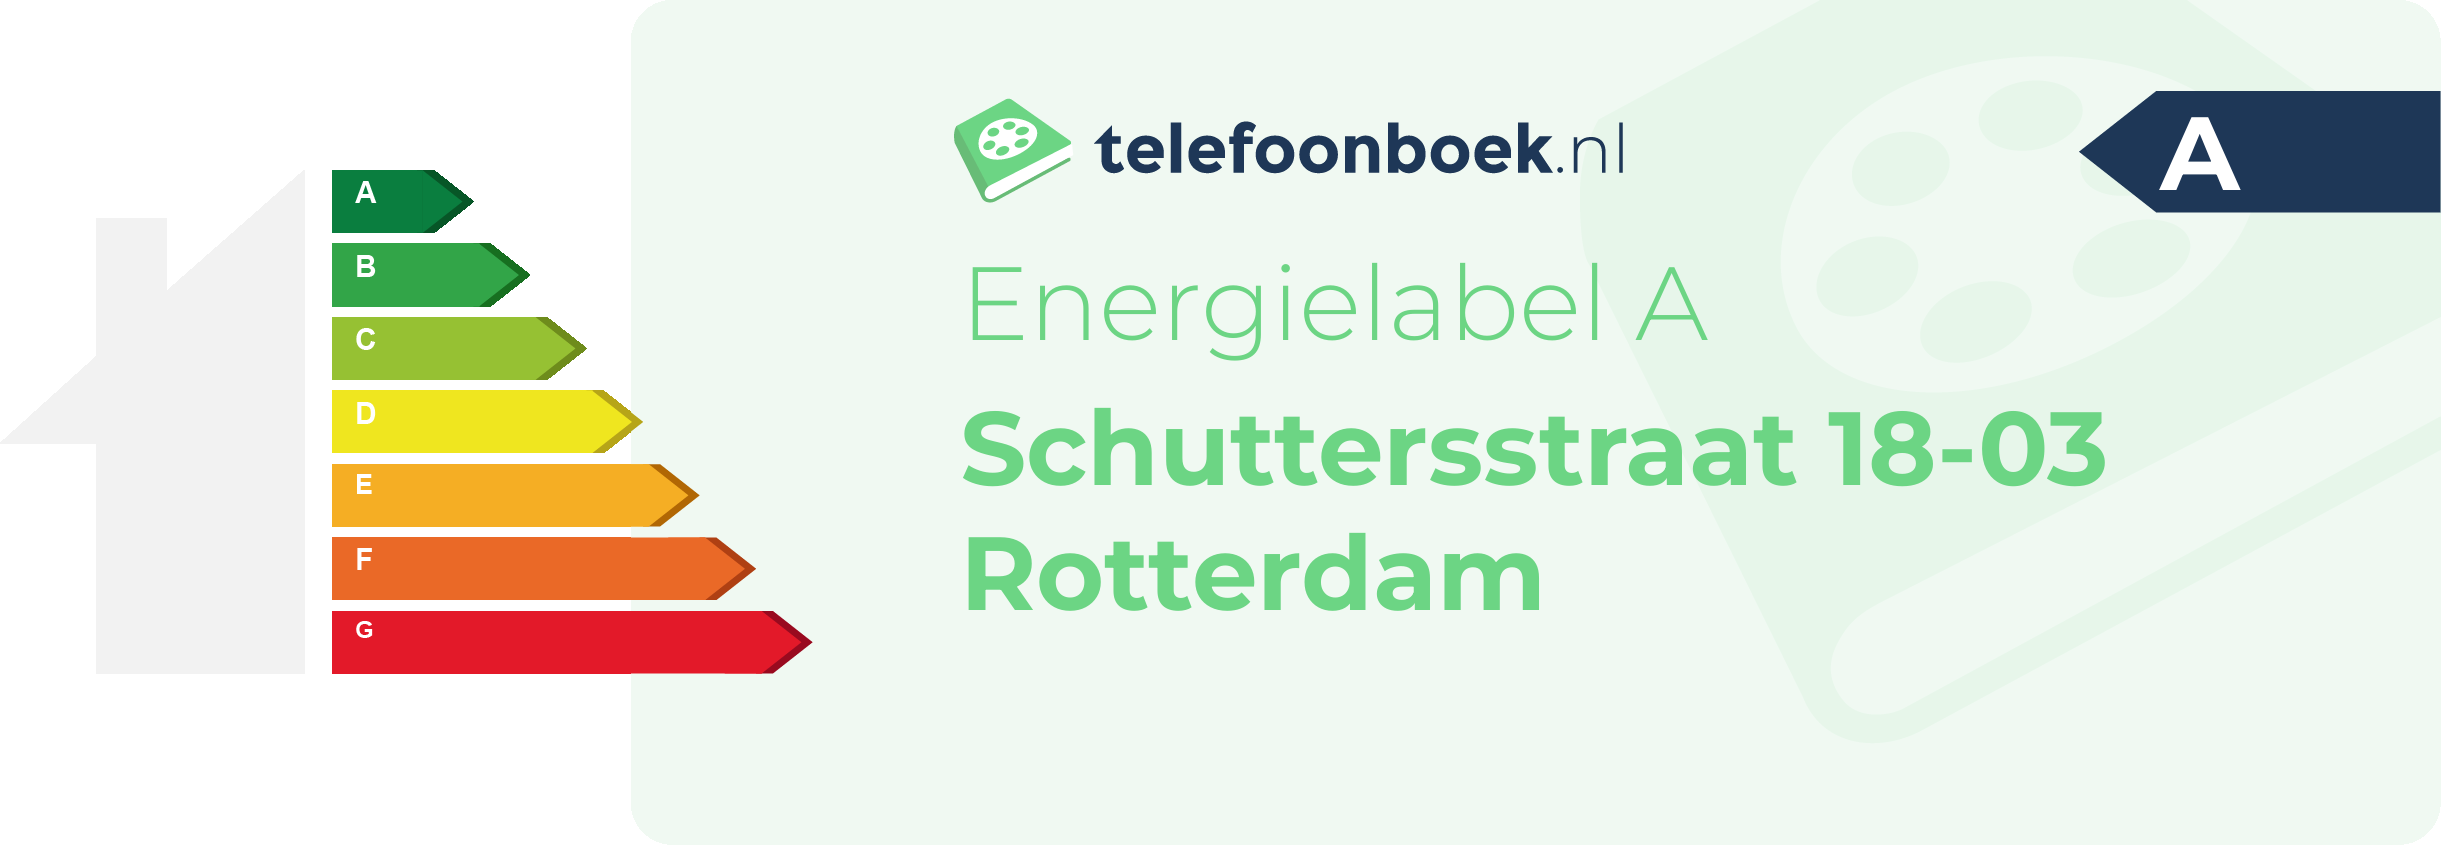 Energielabel Schuttersstraat 18-03 Rotterdam